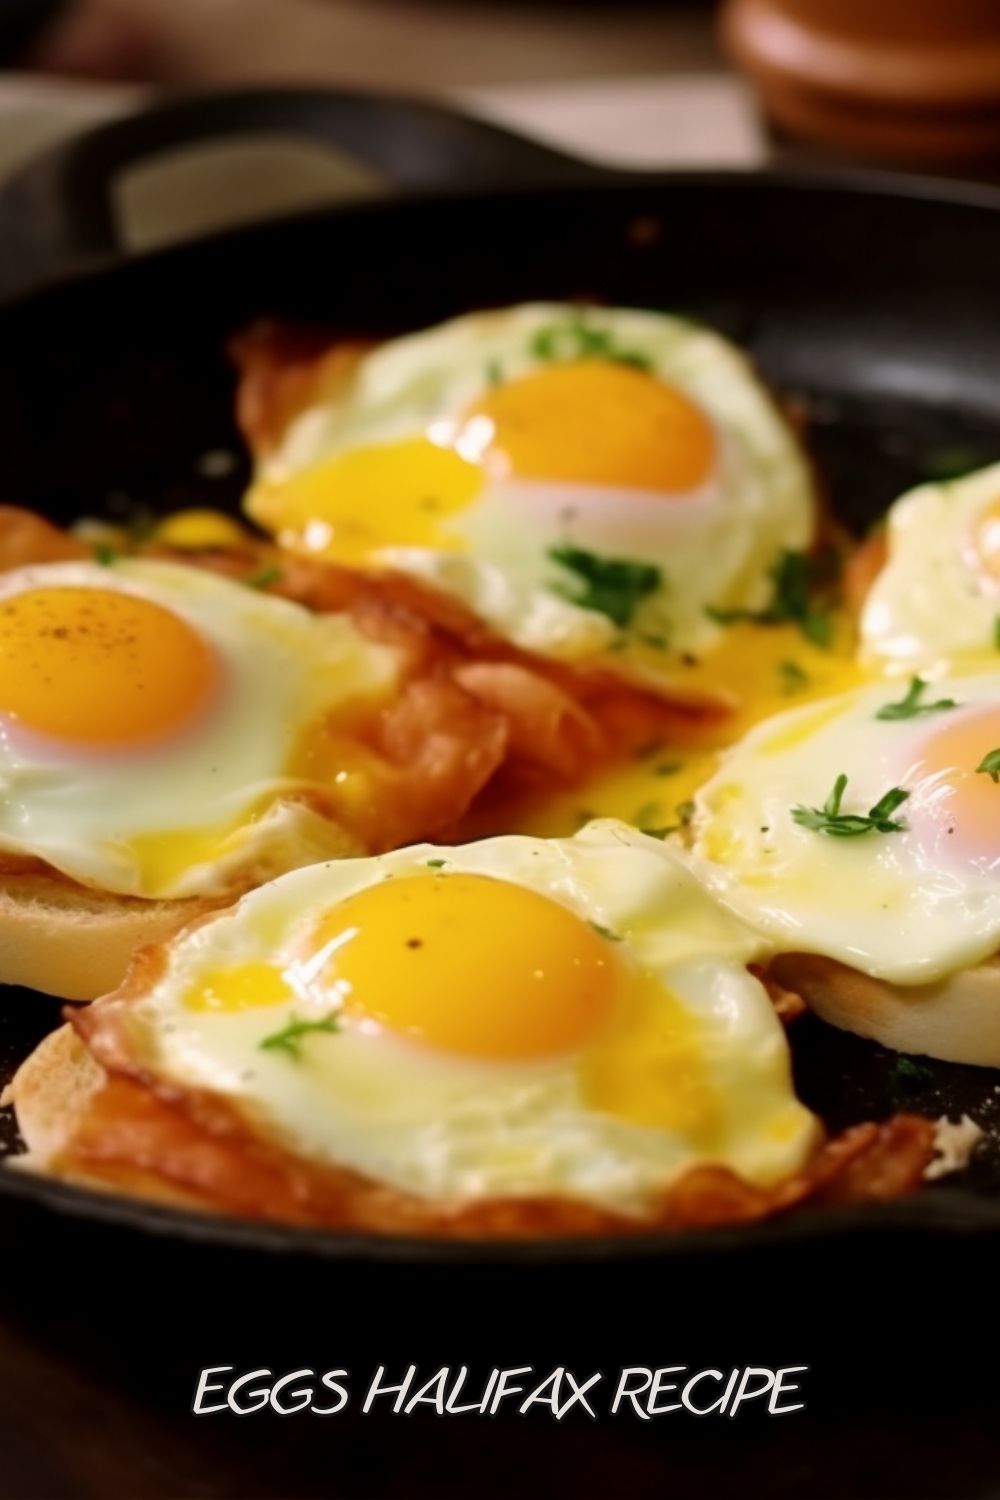 eggs-halifax-recipe-easy-kitchen-guide